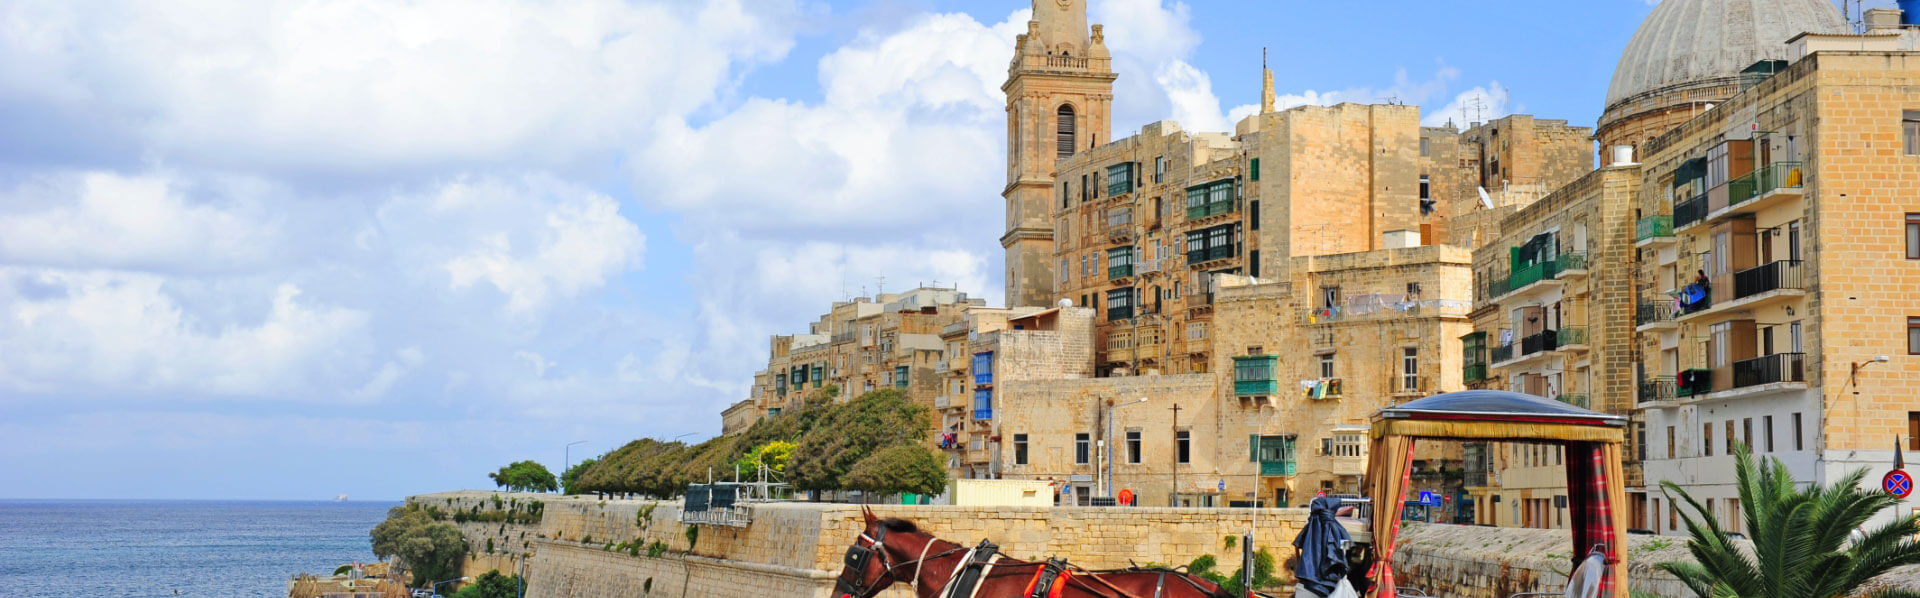 Malta Culture blurry parallax